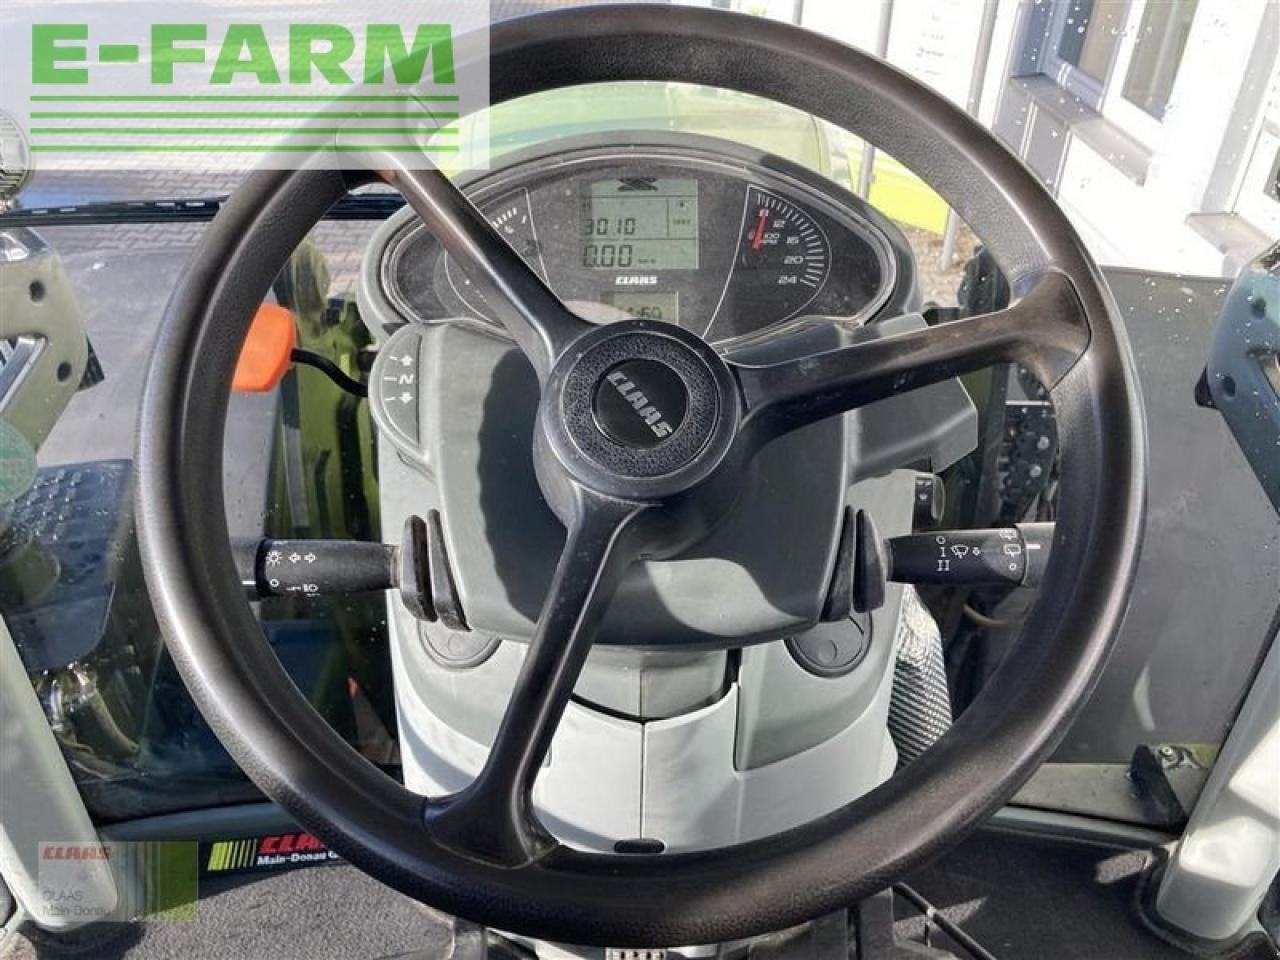 Farm tractor CLAAS arion 650 cmatic